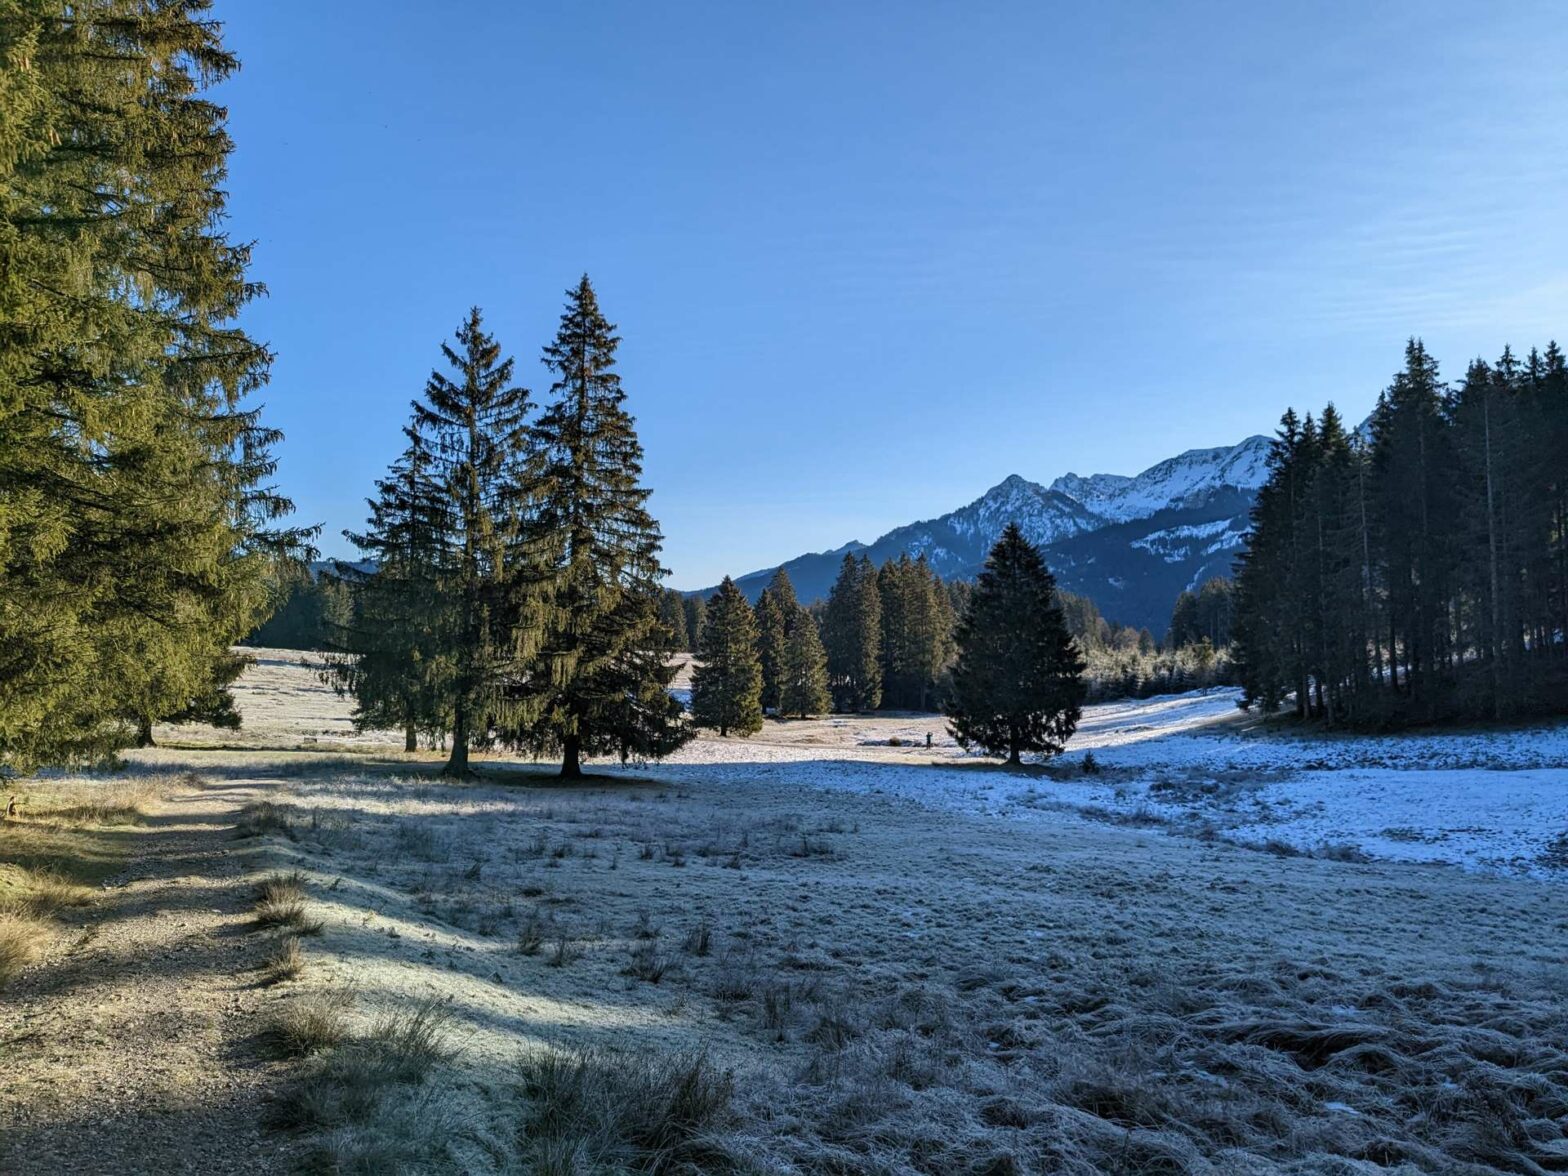 Hiking to Kenzenhutte in the Bavarian Alps